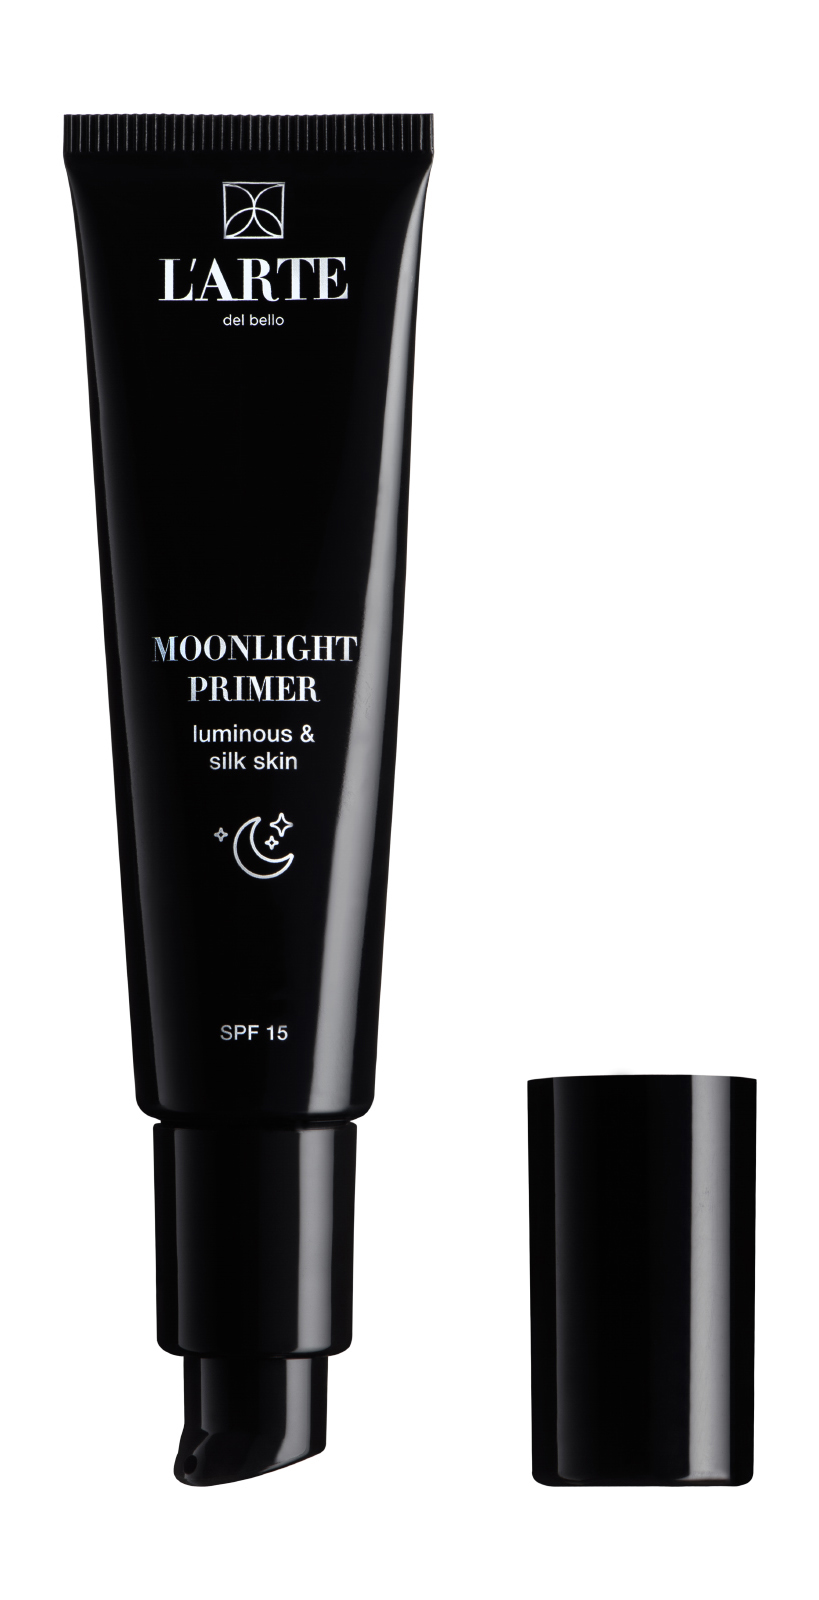 Праймер для сияния кожи лица, L'Arte del bello Moonlight Primer SPF 15, 30мл revolution makeup праймер bright lights primer